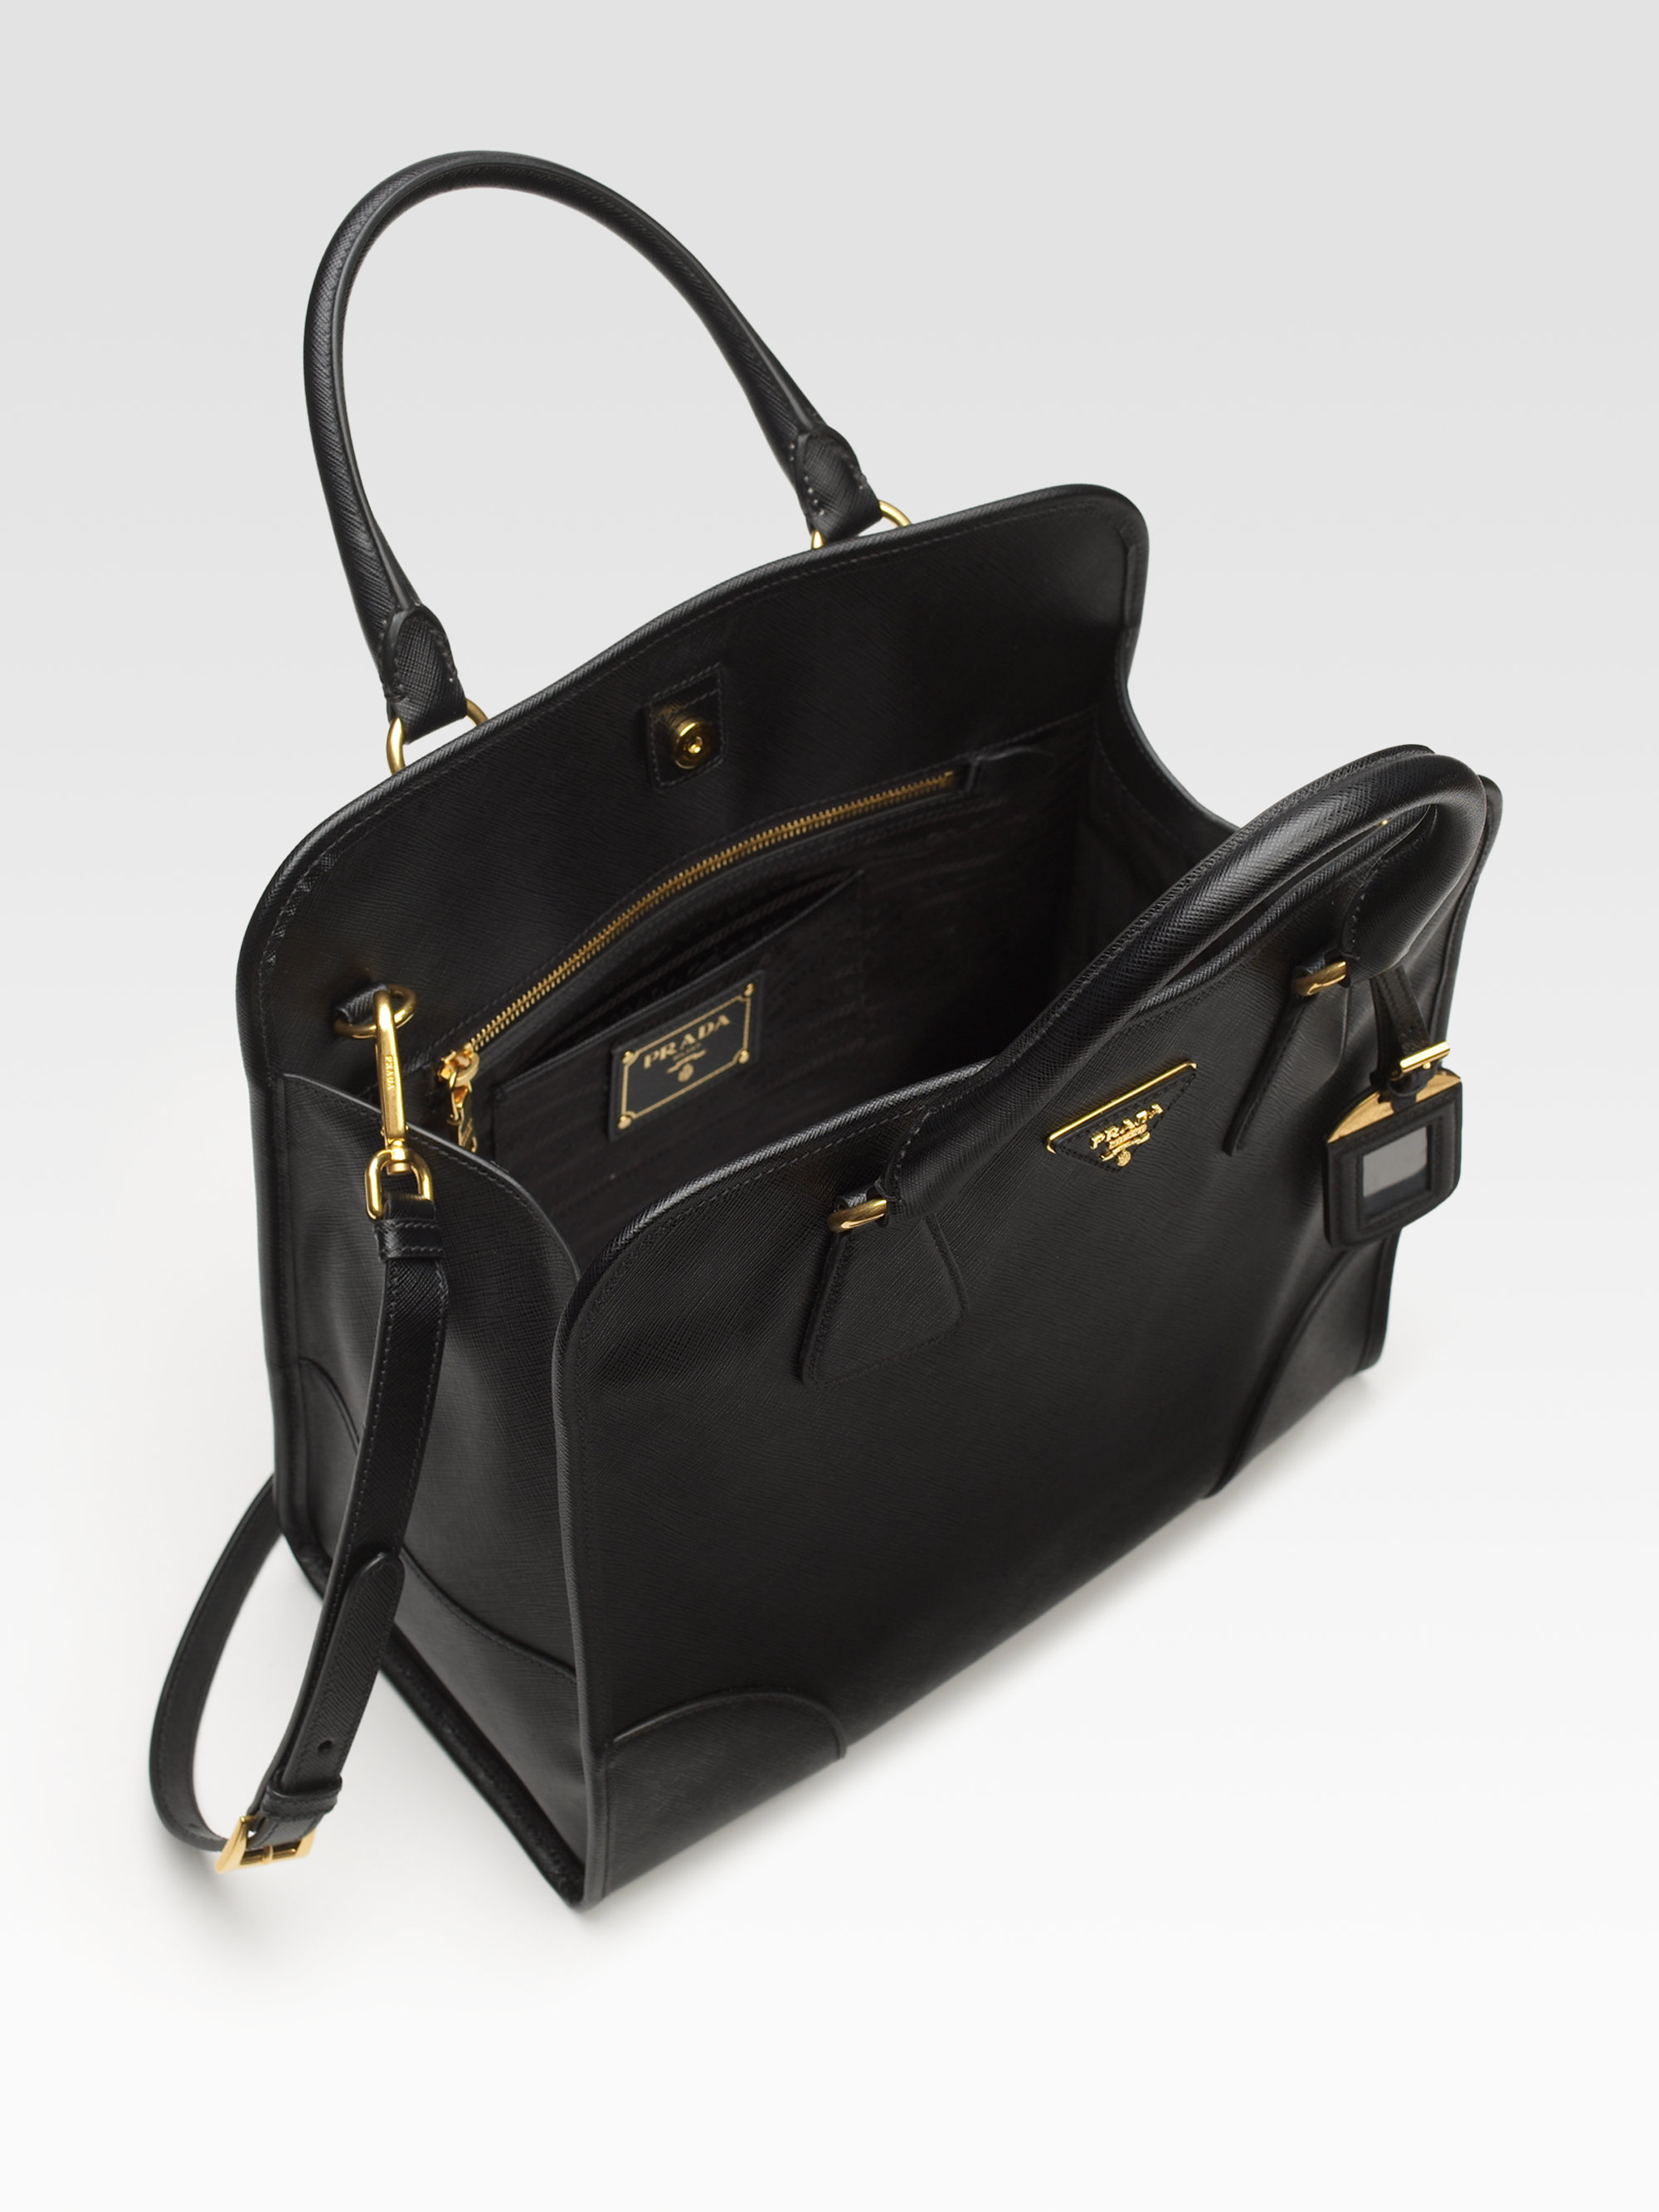 Lyst - Prada Luxe Tote Bag in Black